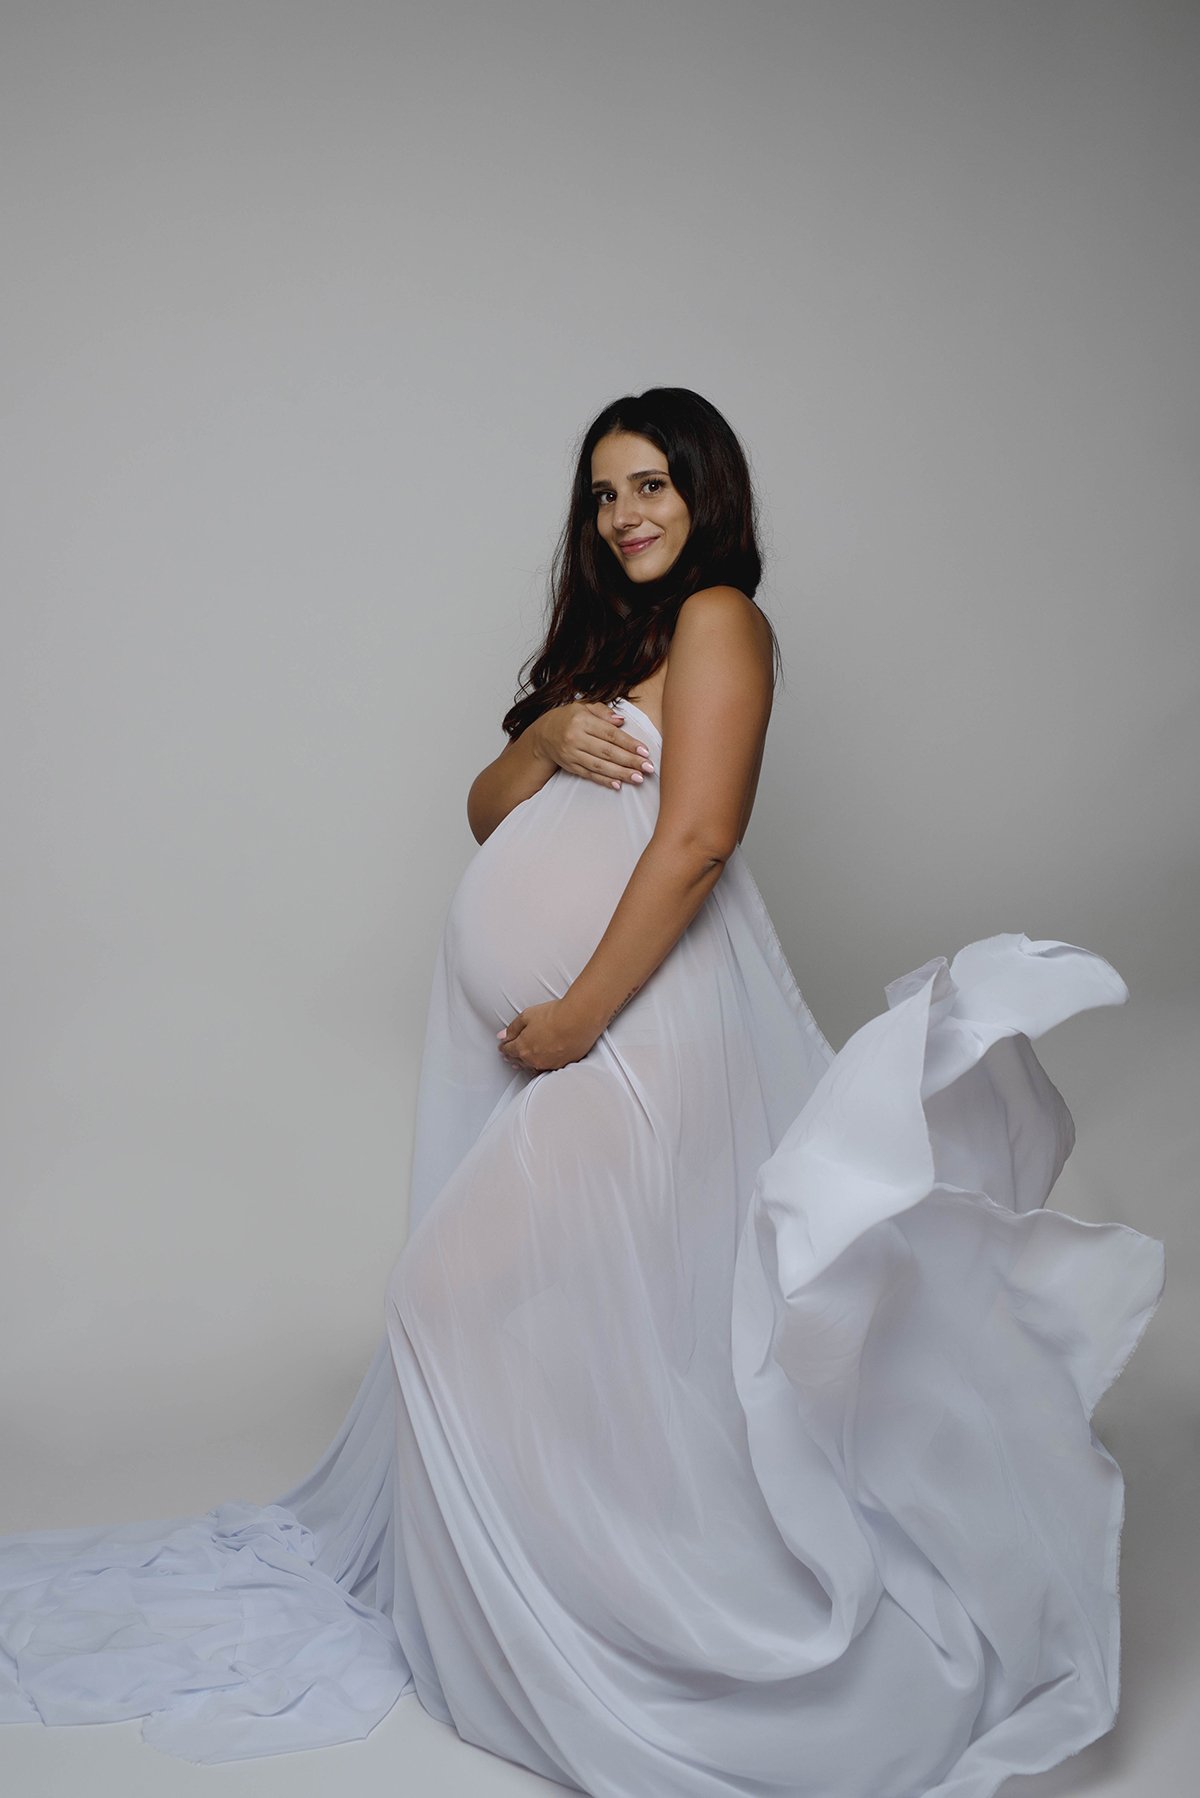 maternity-pregnancy-photographer-san-juan-puerto-rico-fabric-dress-gown-fotografa-maternidad-embarazo-07.jpg